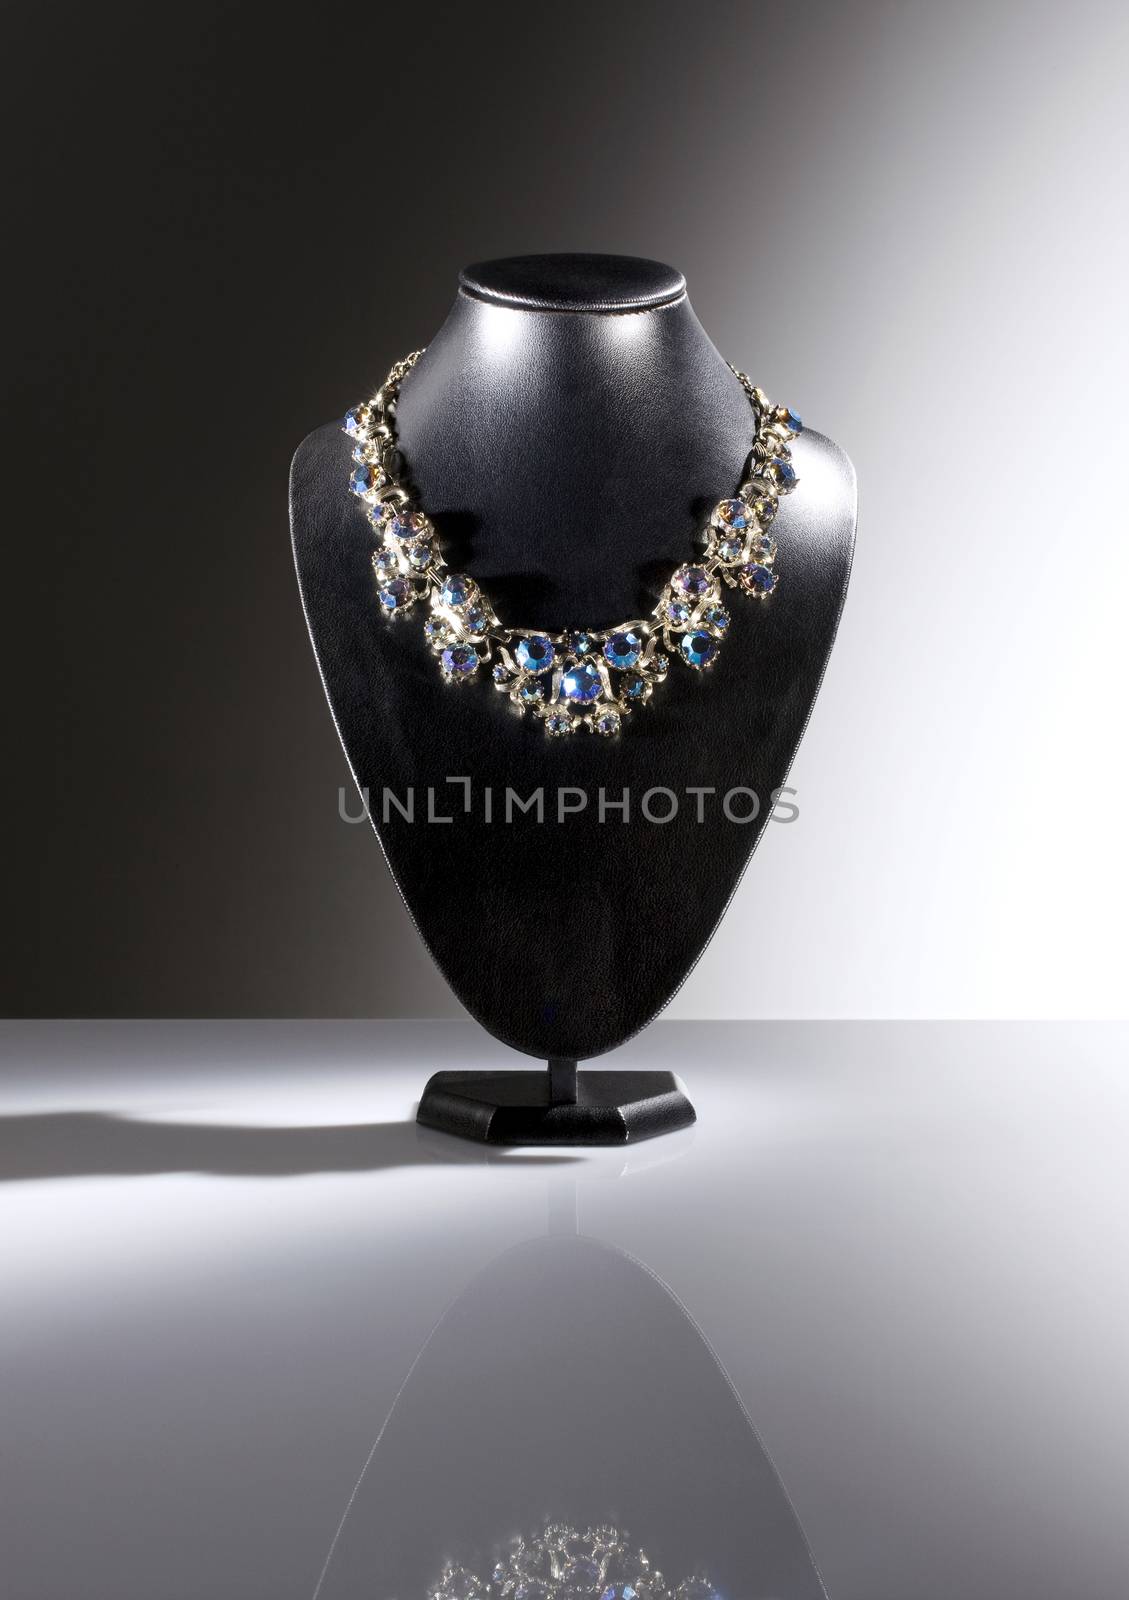 Jewelry diamond display on a dark background by janssenkruseproductions